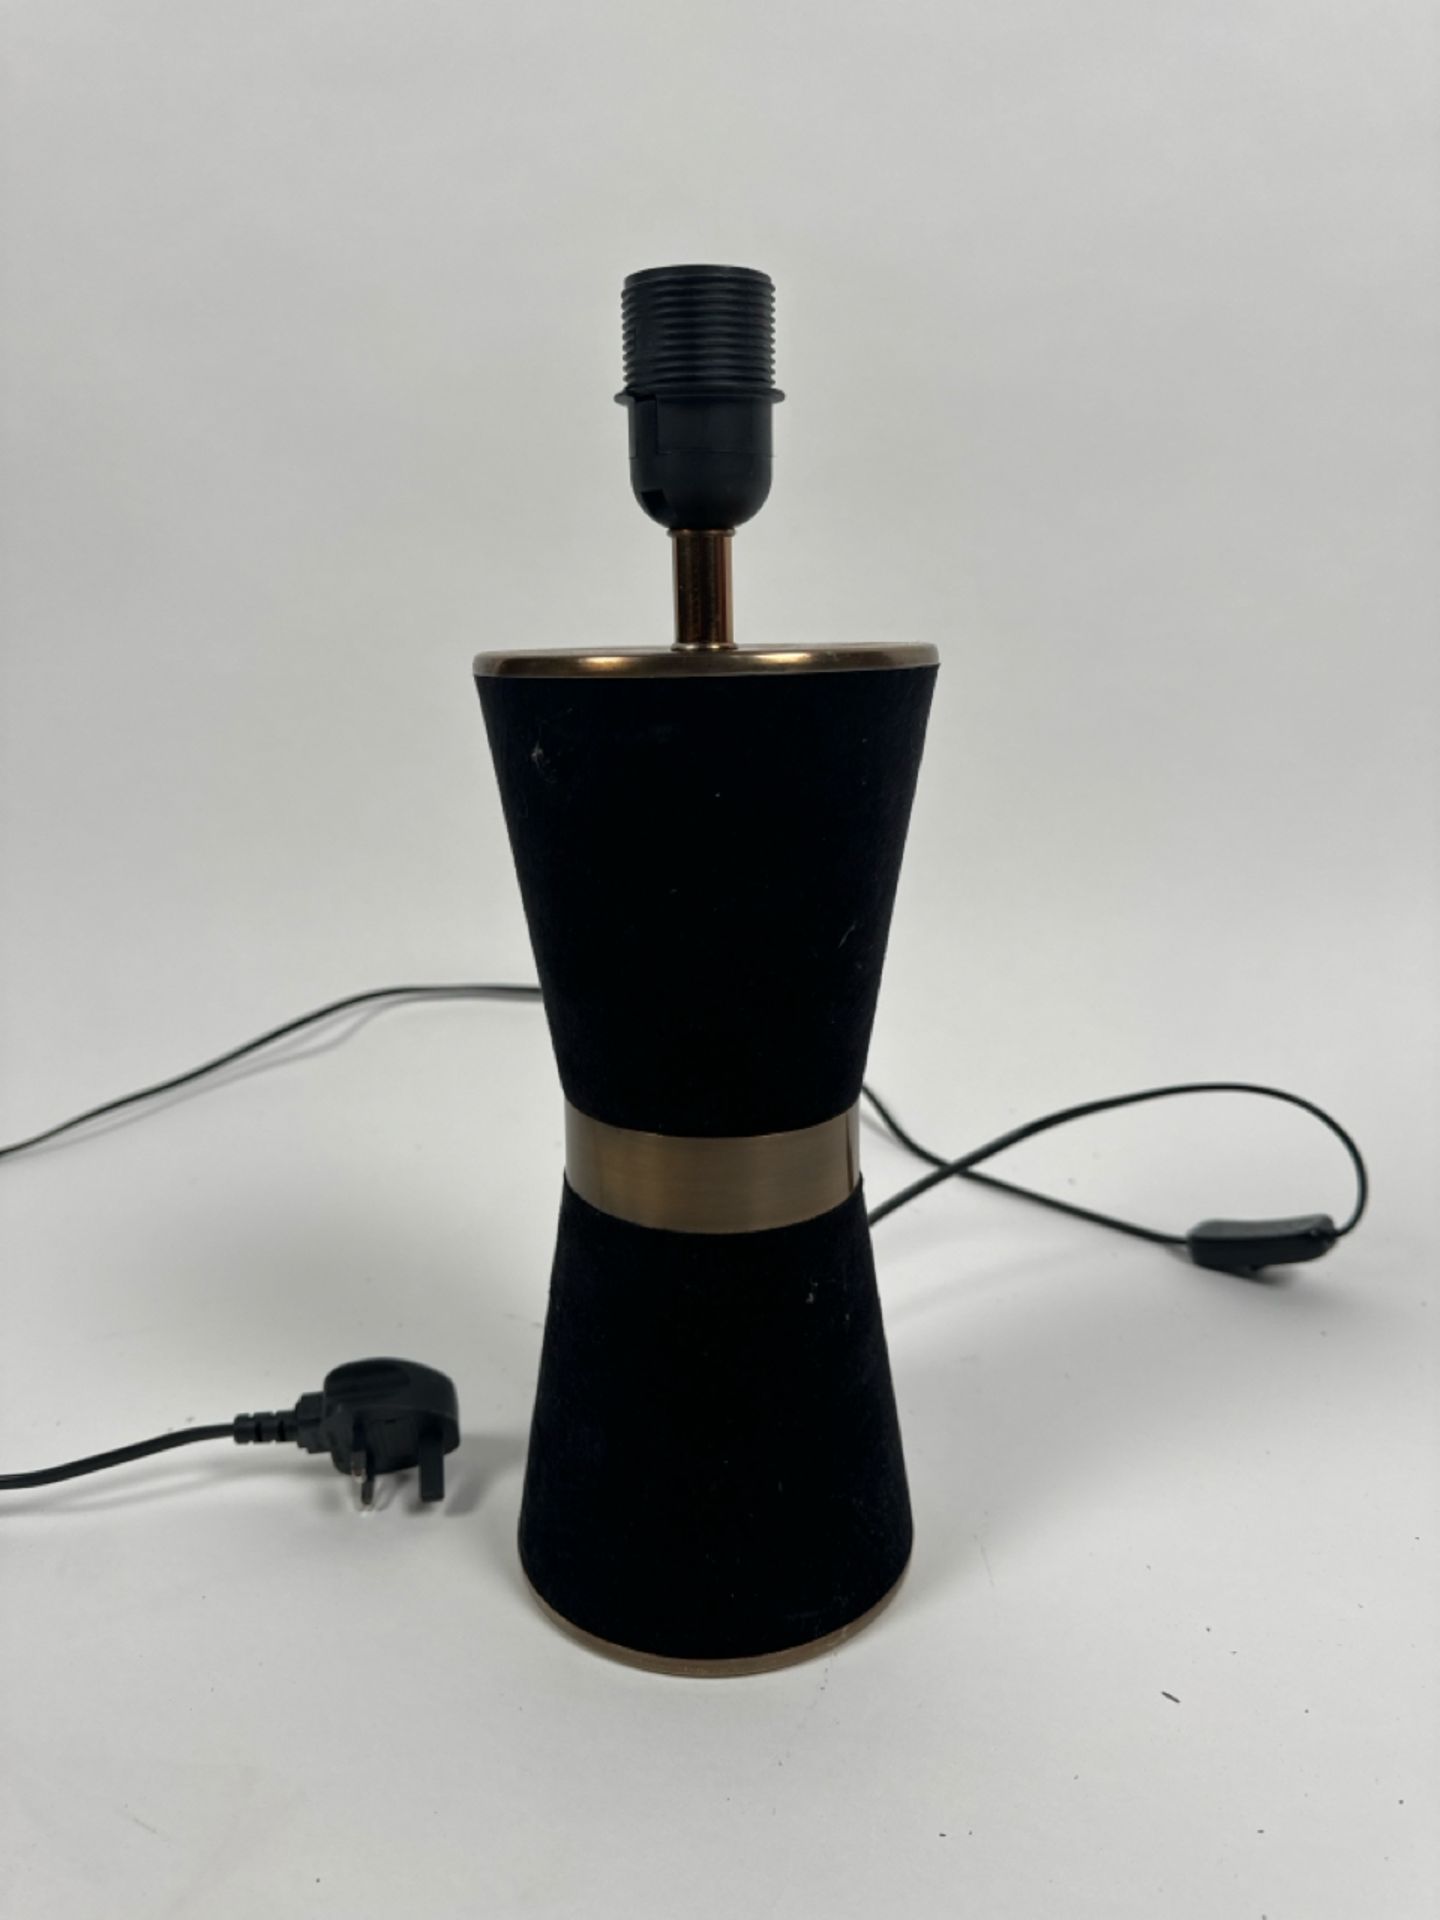 Black Table Lamp Designed By Amara - Image 2 of 4